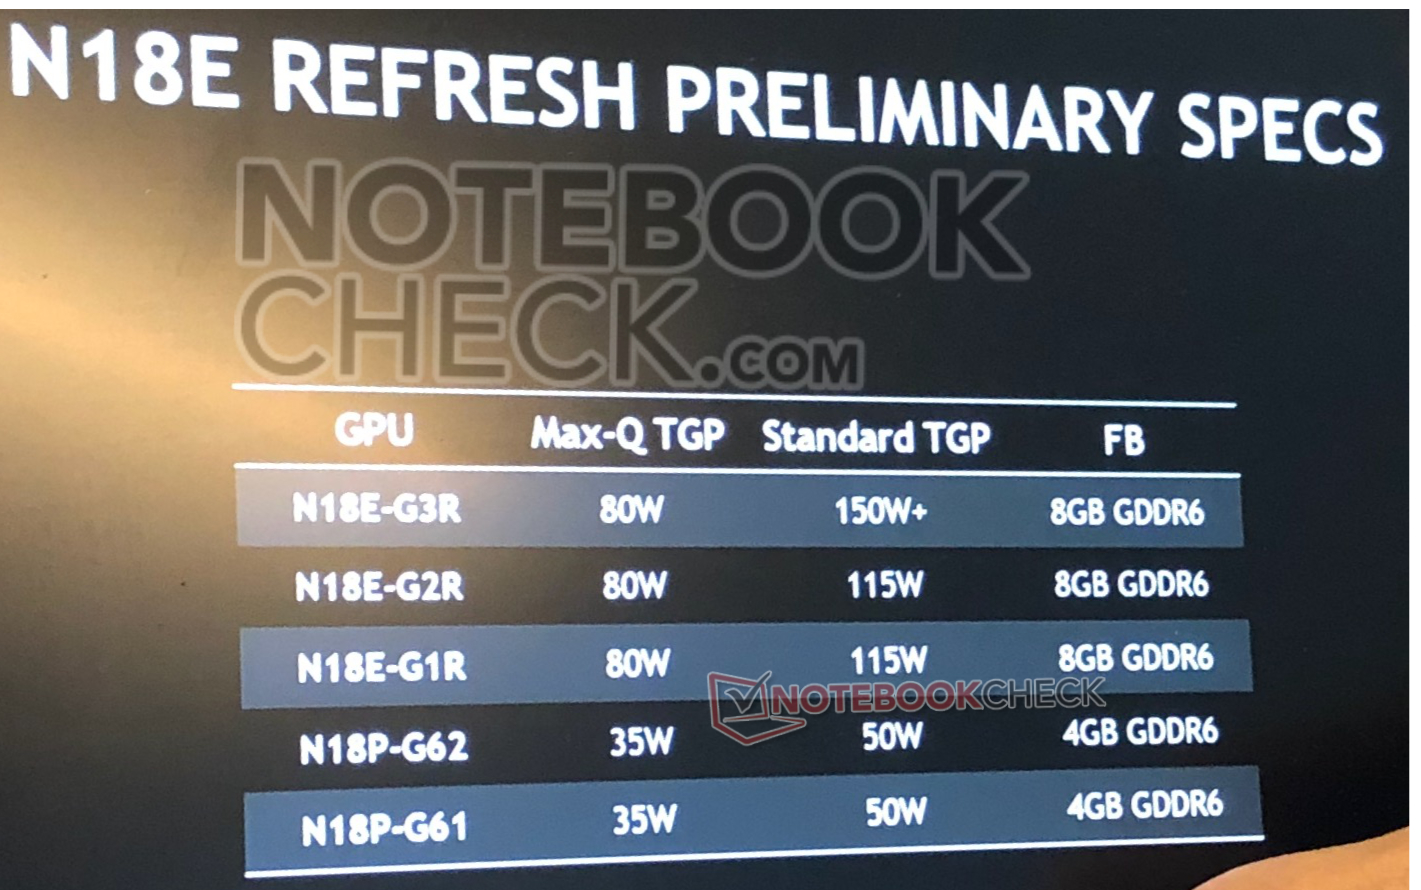 intel gma x4500 dynamic video memory technology 5.0 vs nvidia quadro nvs 295